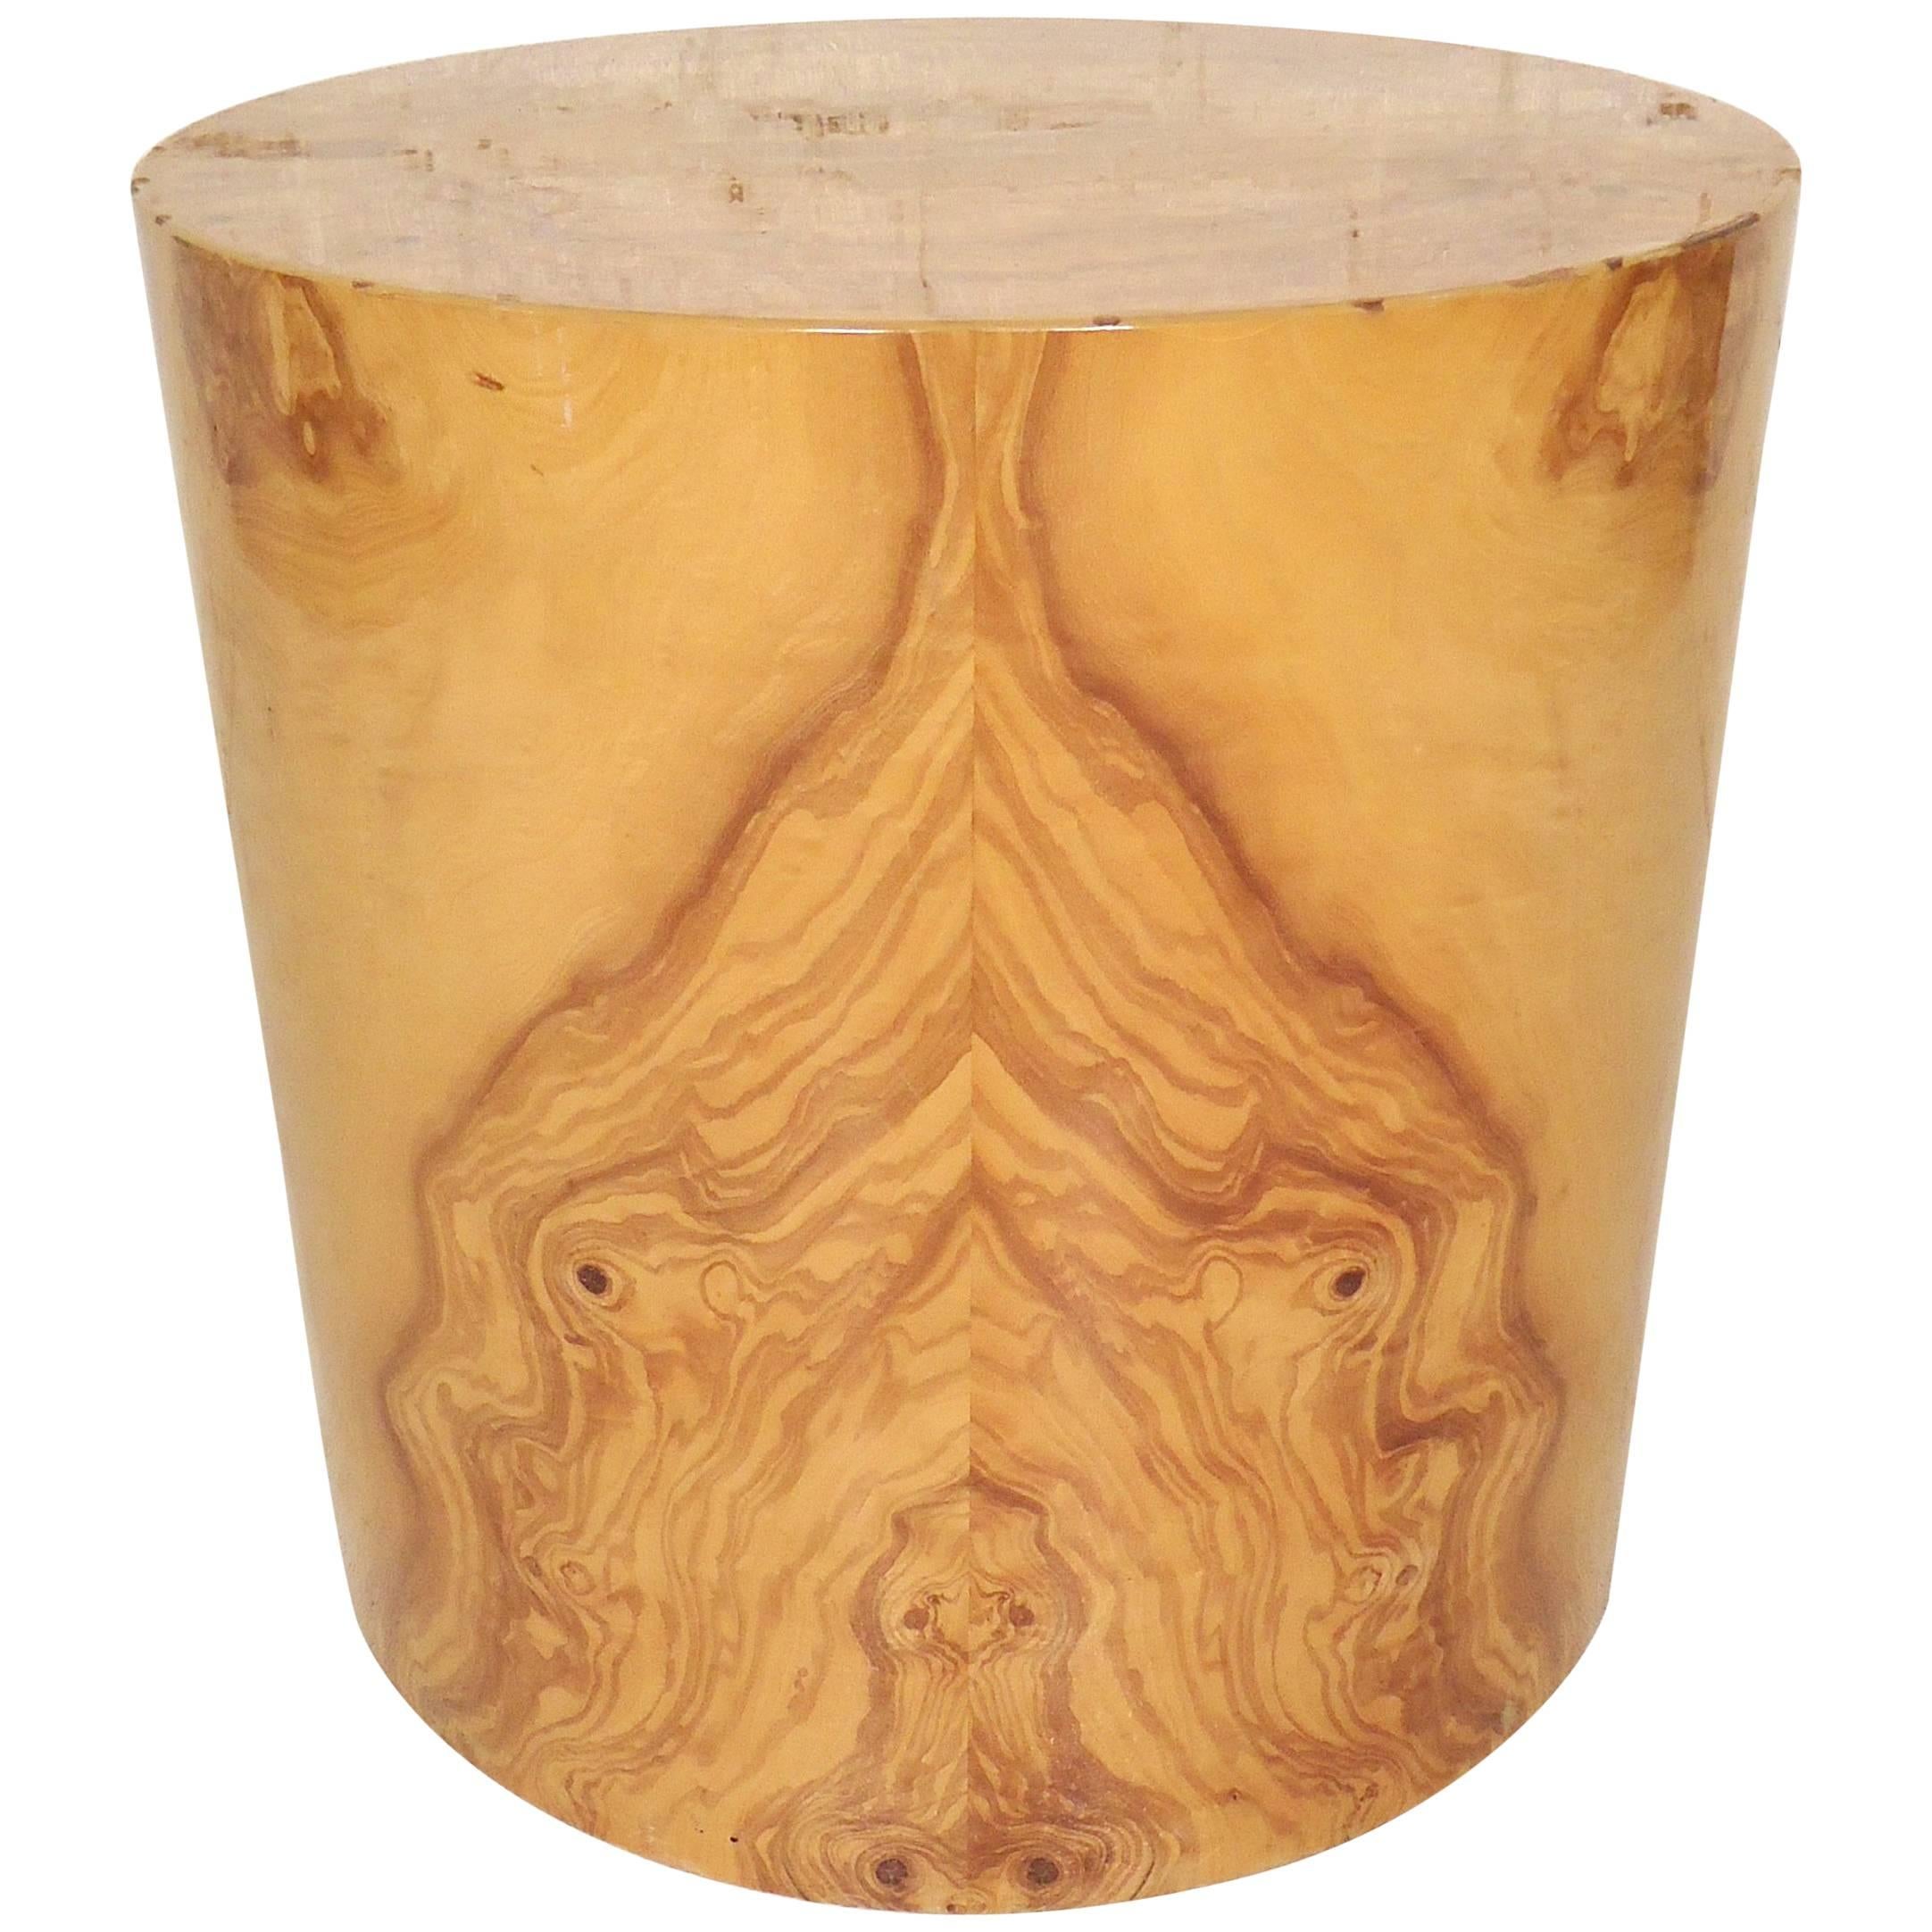 Burl Wood Round Pedestal Table